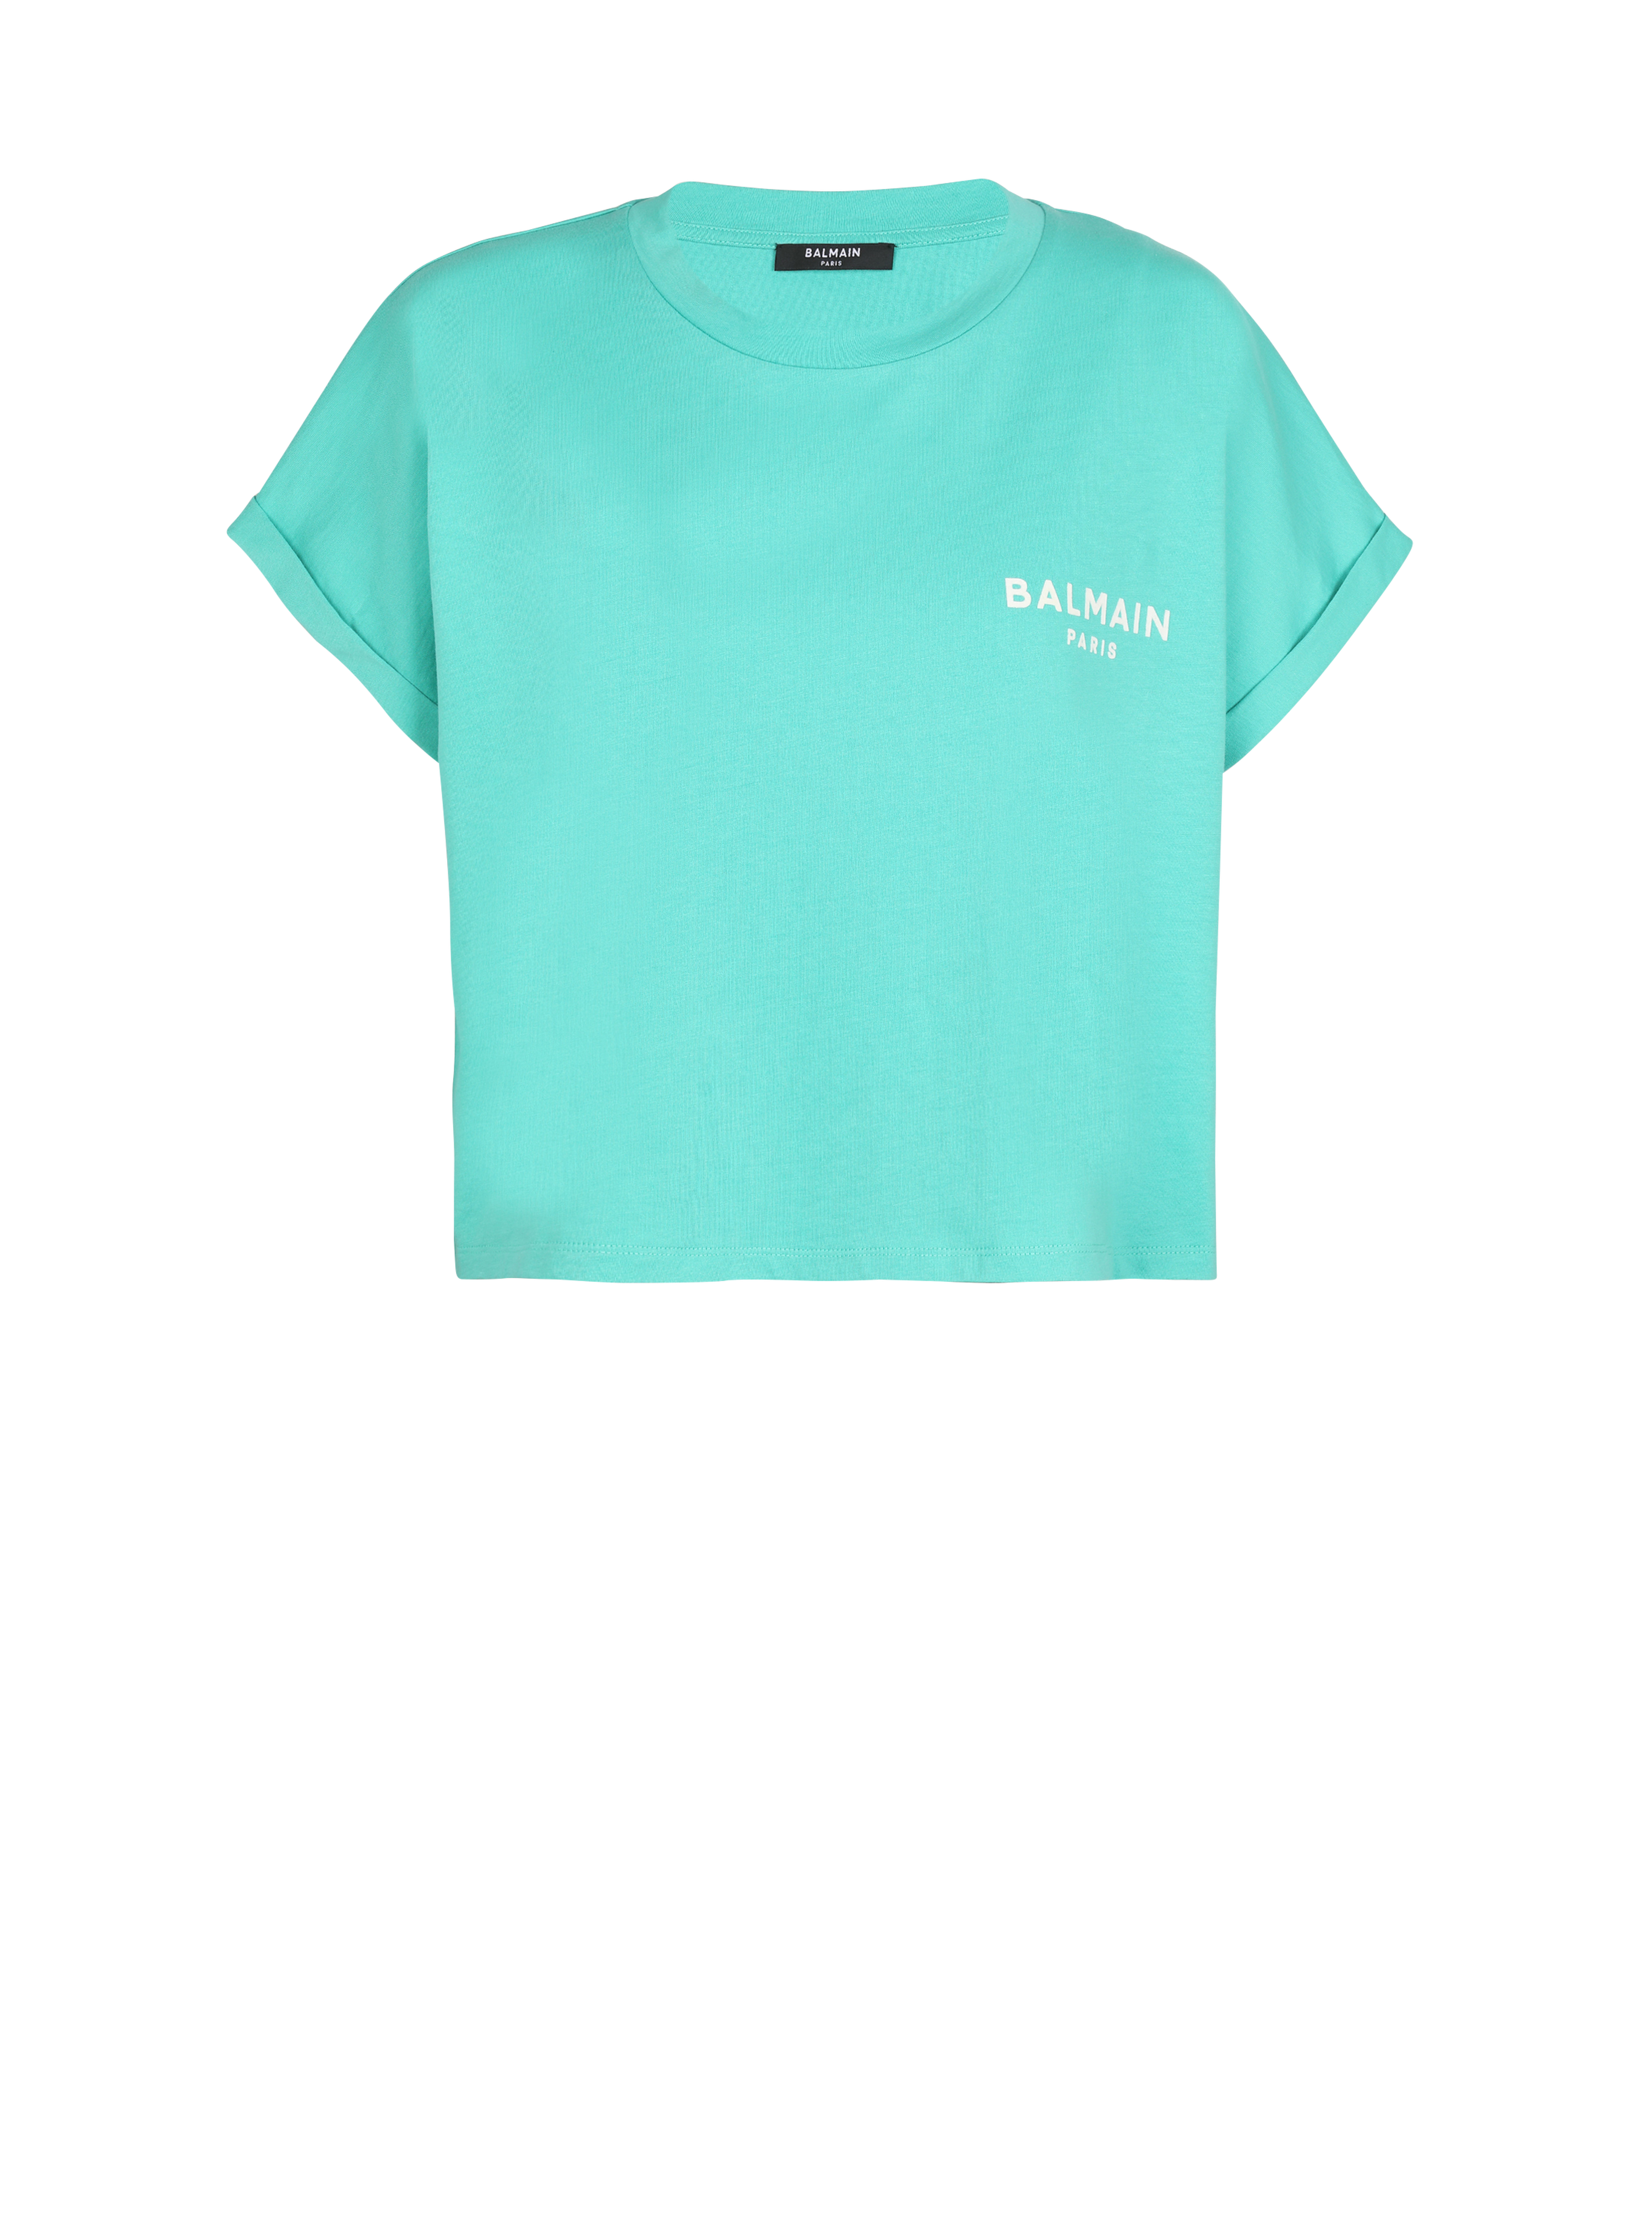 Eco-responsible cropped cotton T-shirt with Balmain logo print, blue